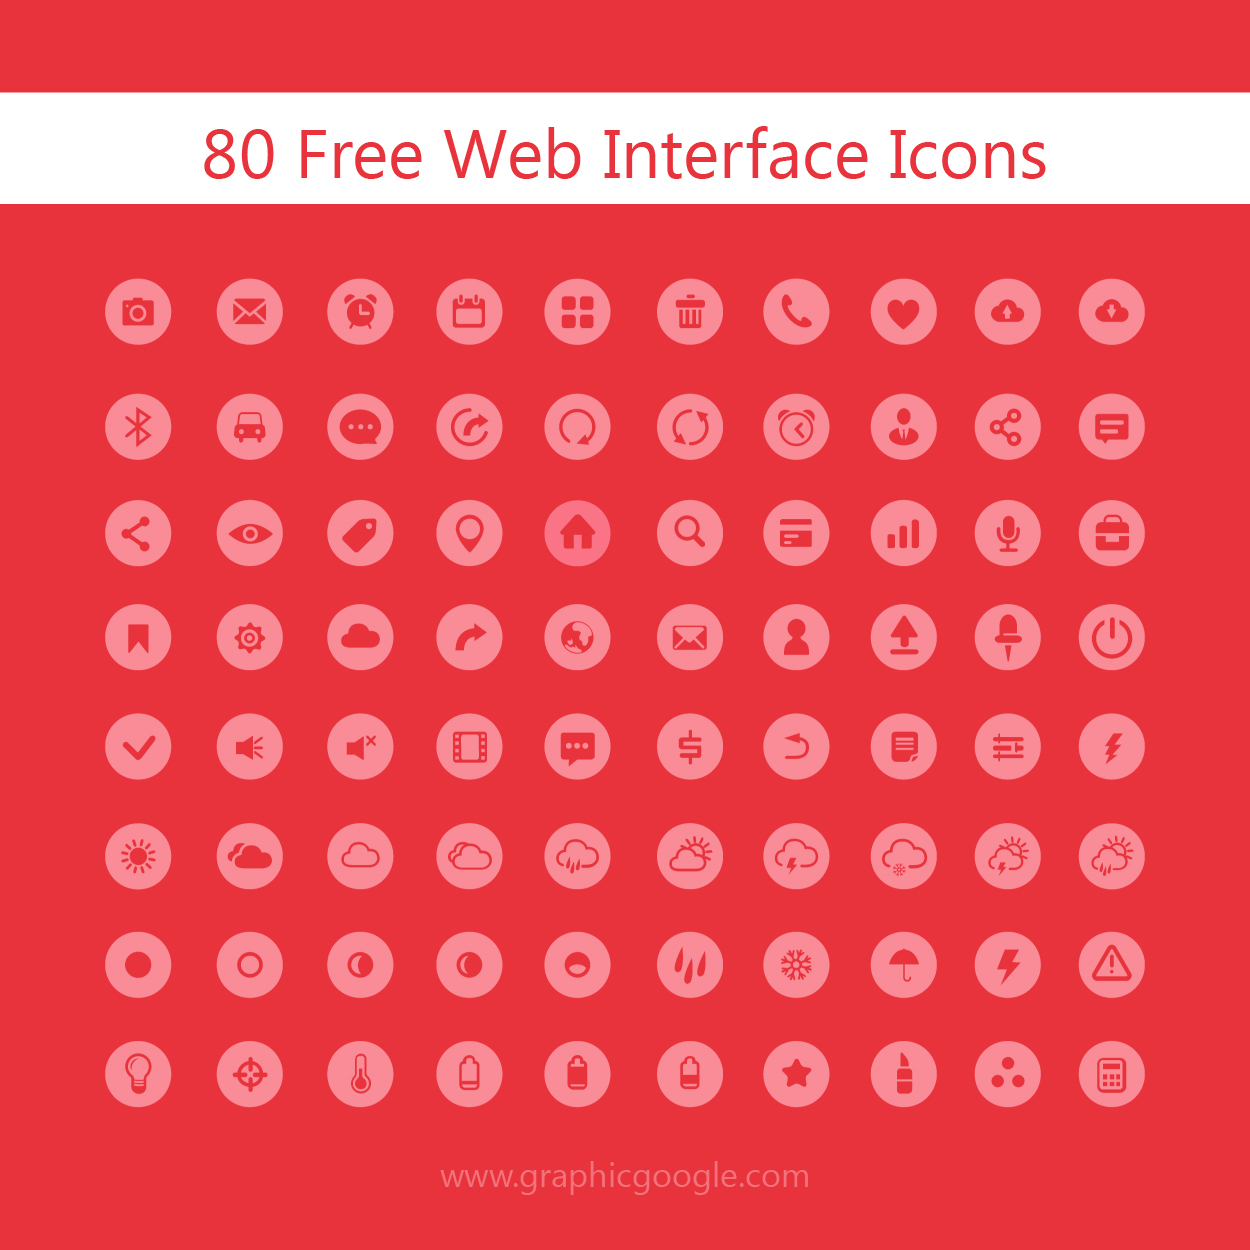 80 Free Web Interface Icons